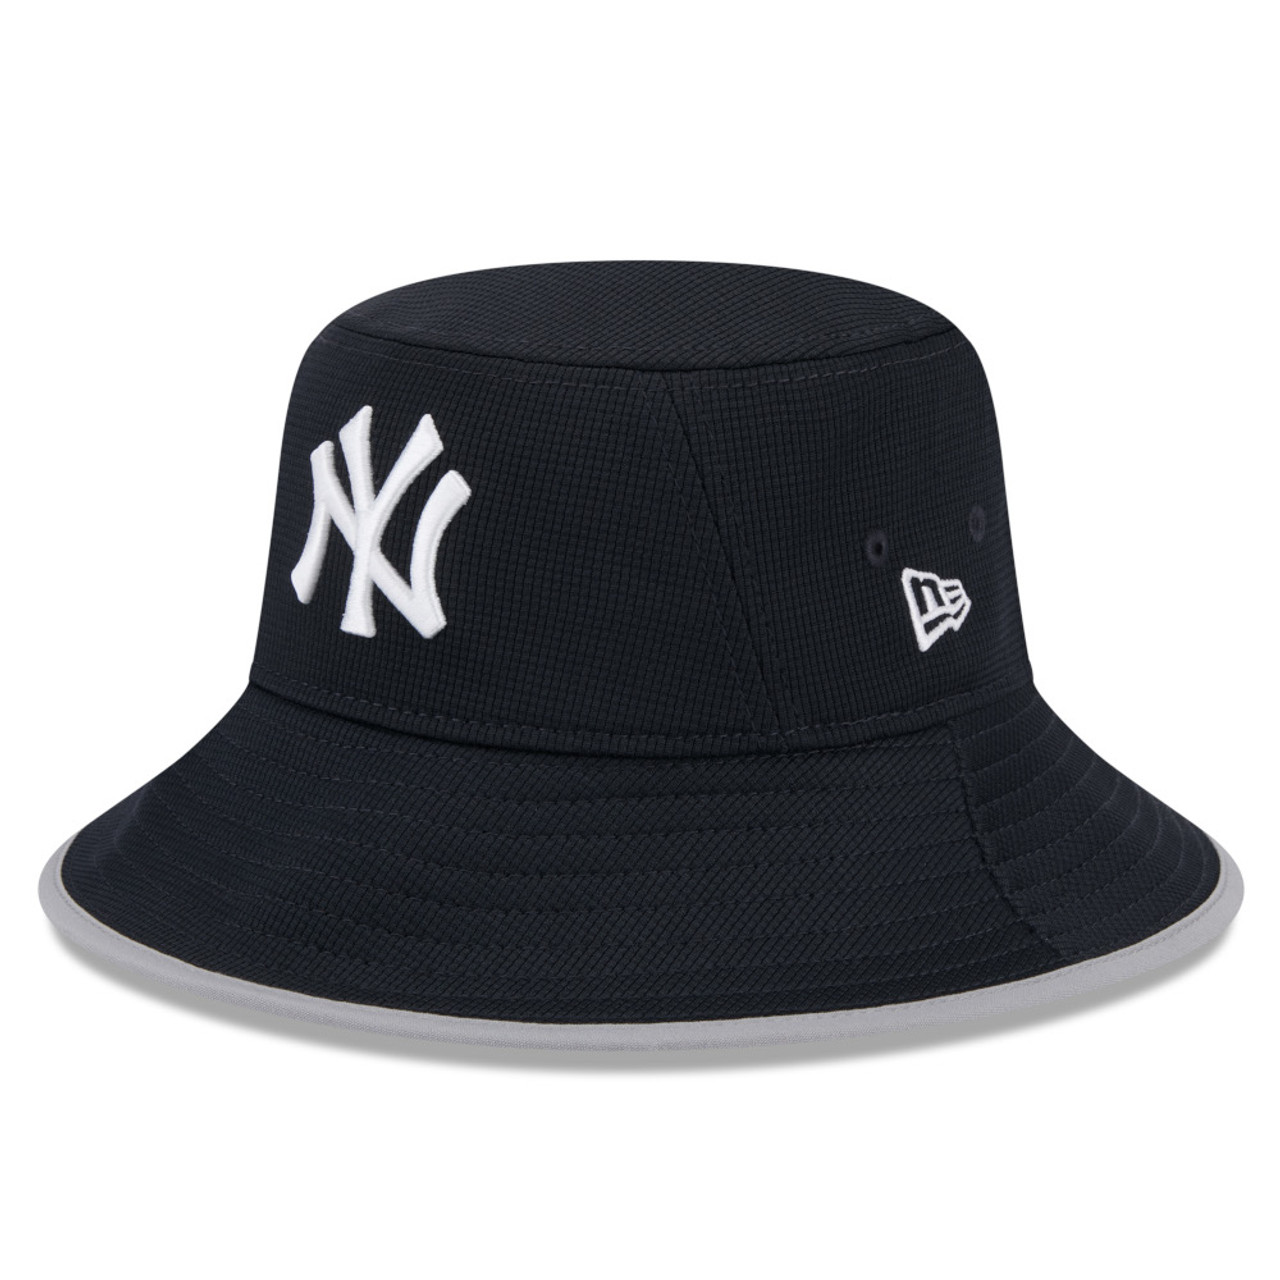 Mens Caps & Hats, Baseball, Snapback, Bucket